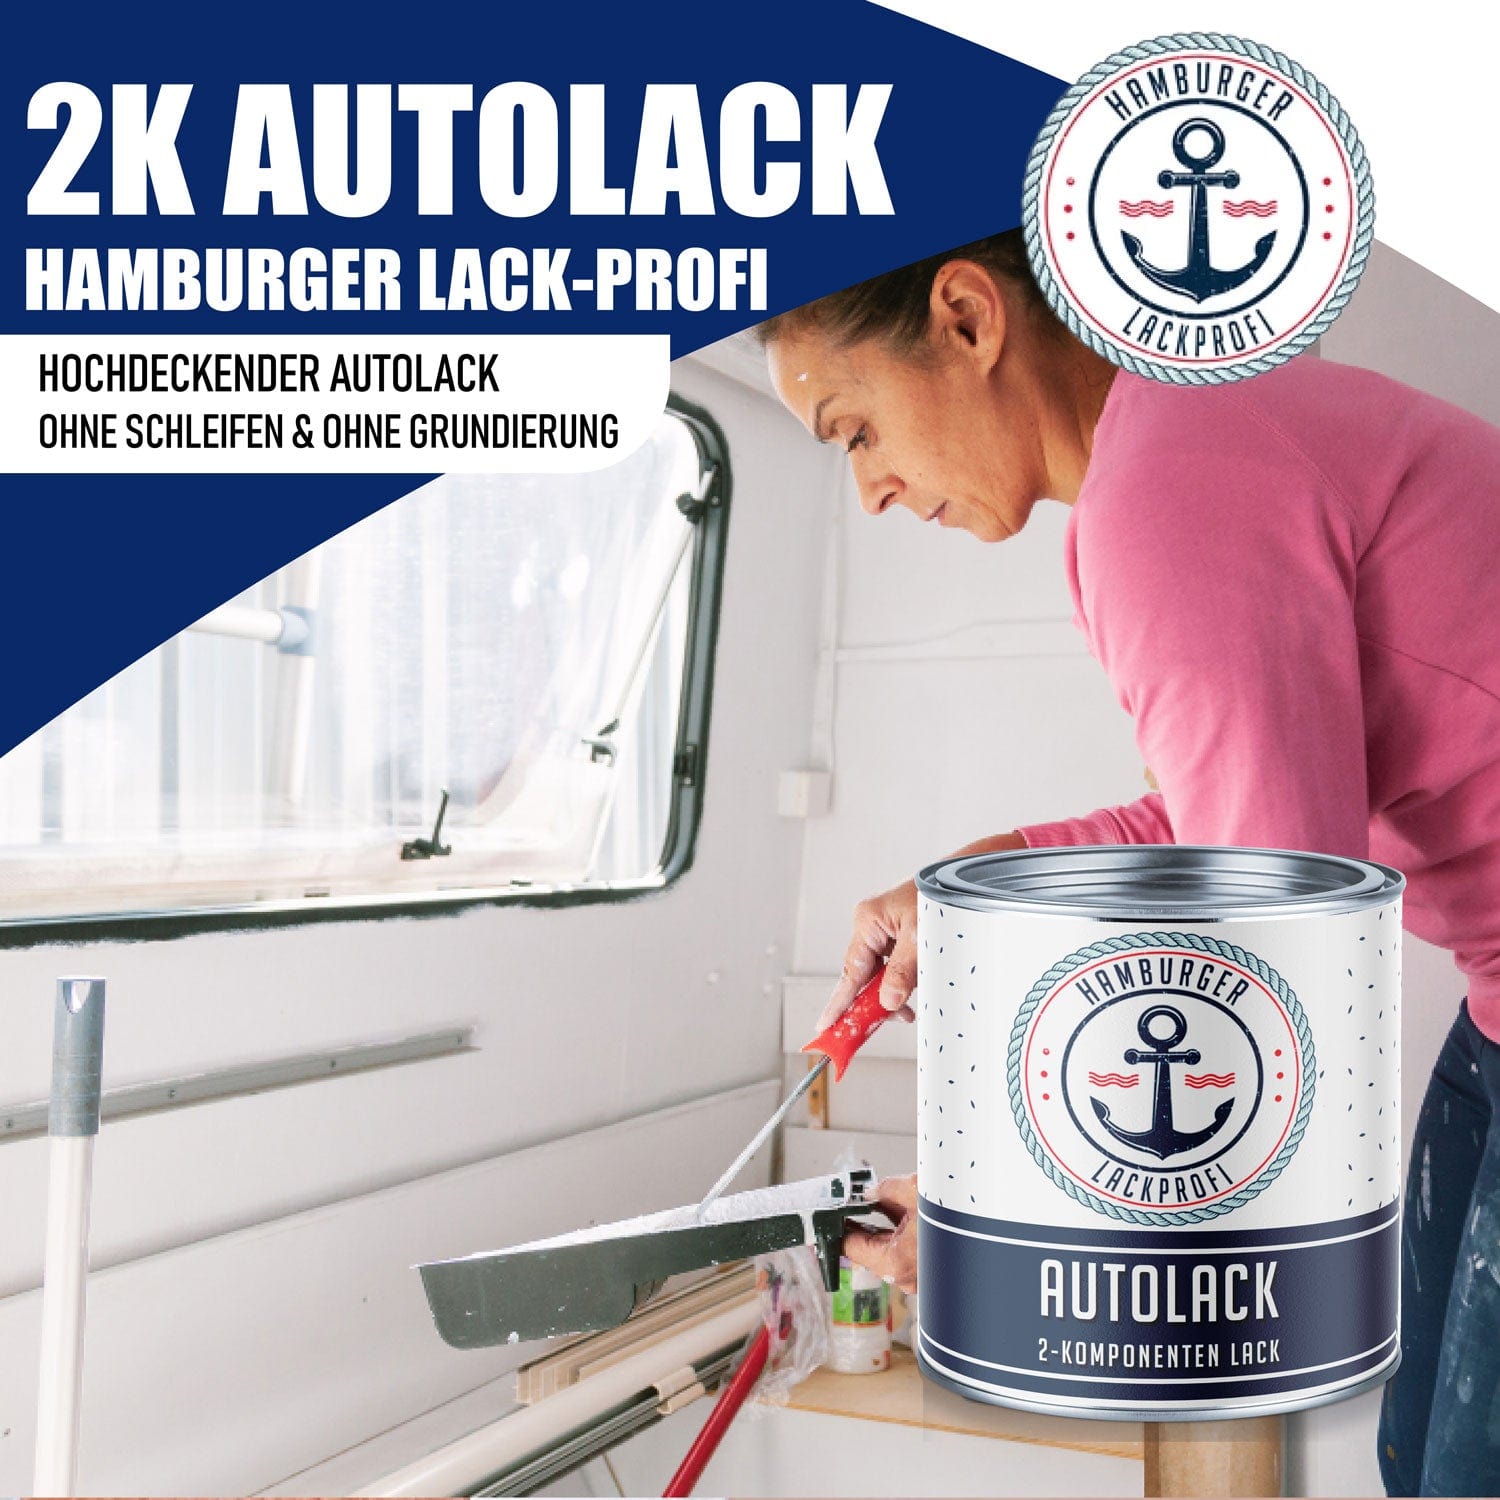 Hamburger Lack-Profi Lacke & Beschichtungen Hamburger Lack-Profi 2K Autolack in Signalschwarz RAL 9004 mit Lackierset (X300) & Verdünnung (1 L) - 30% Sparangebot